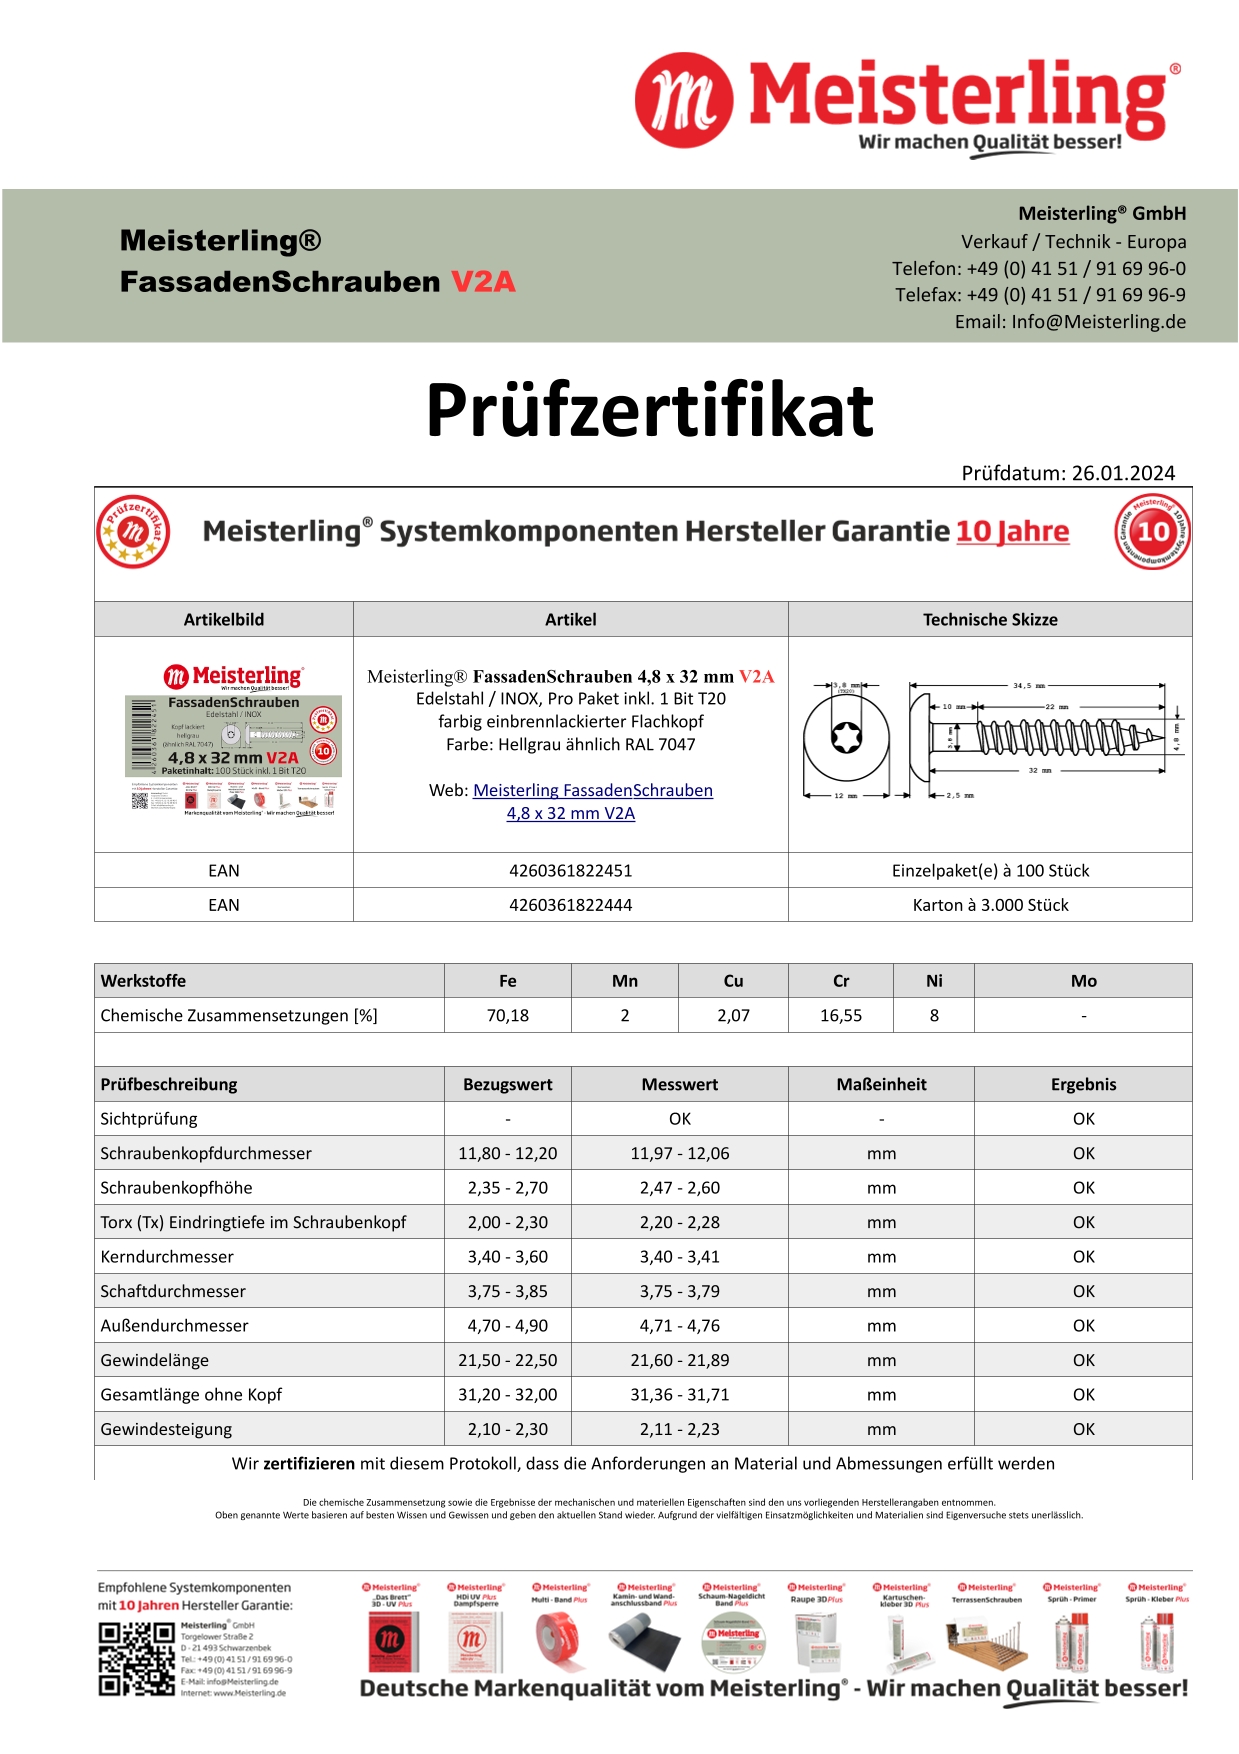 Prüfzertifikat Meisterling® FassadenSchrauben 4,8 x 32 mm V2a hellgrau